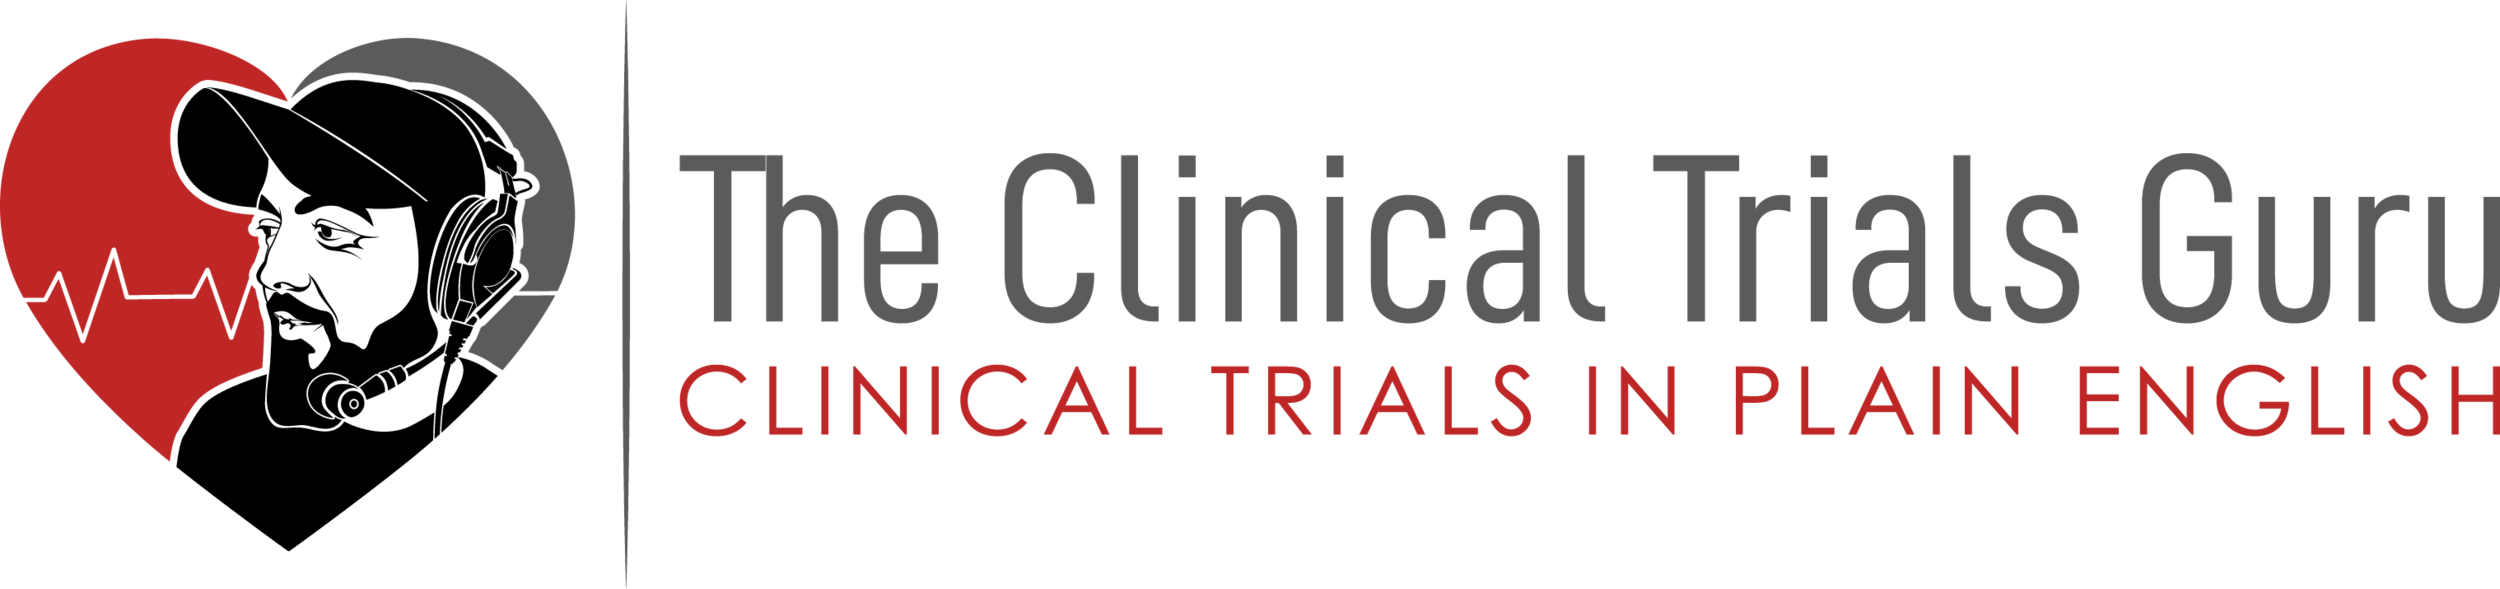 The Clinical Trials Guru